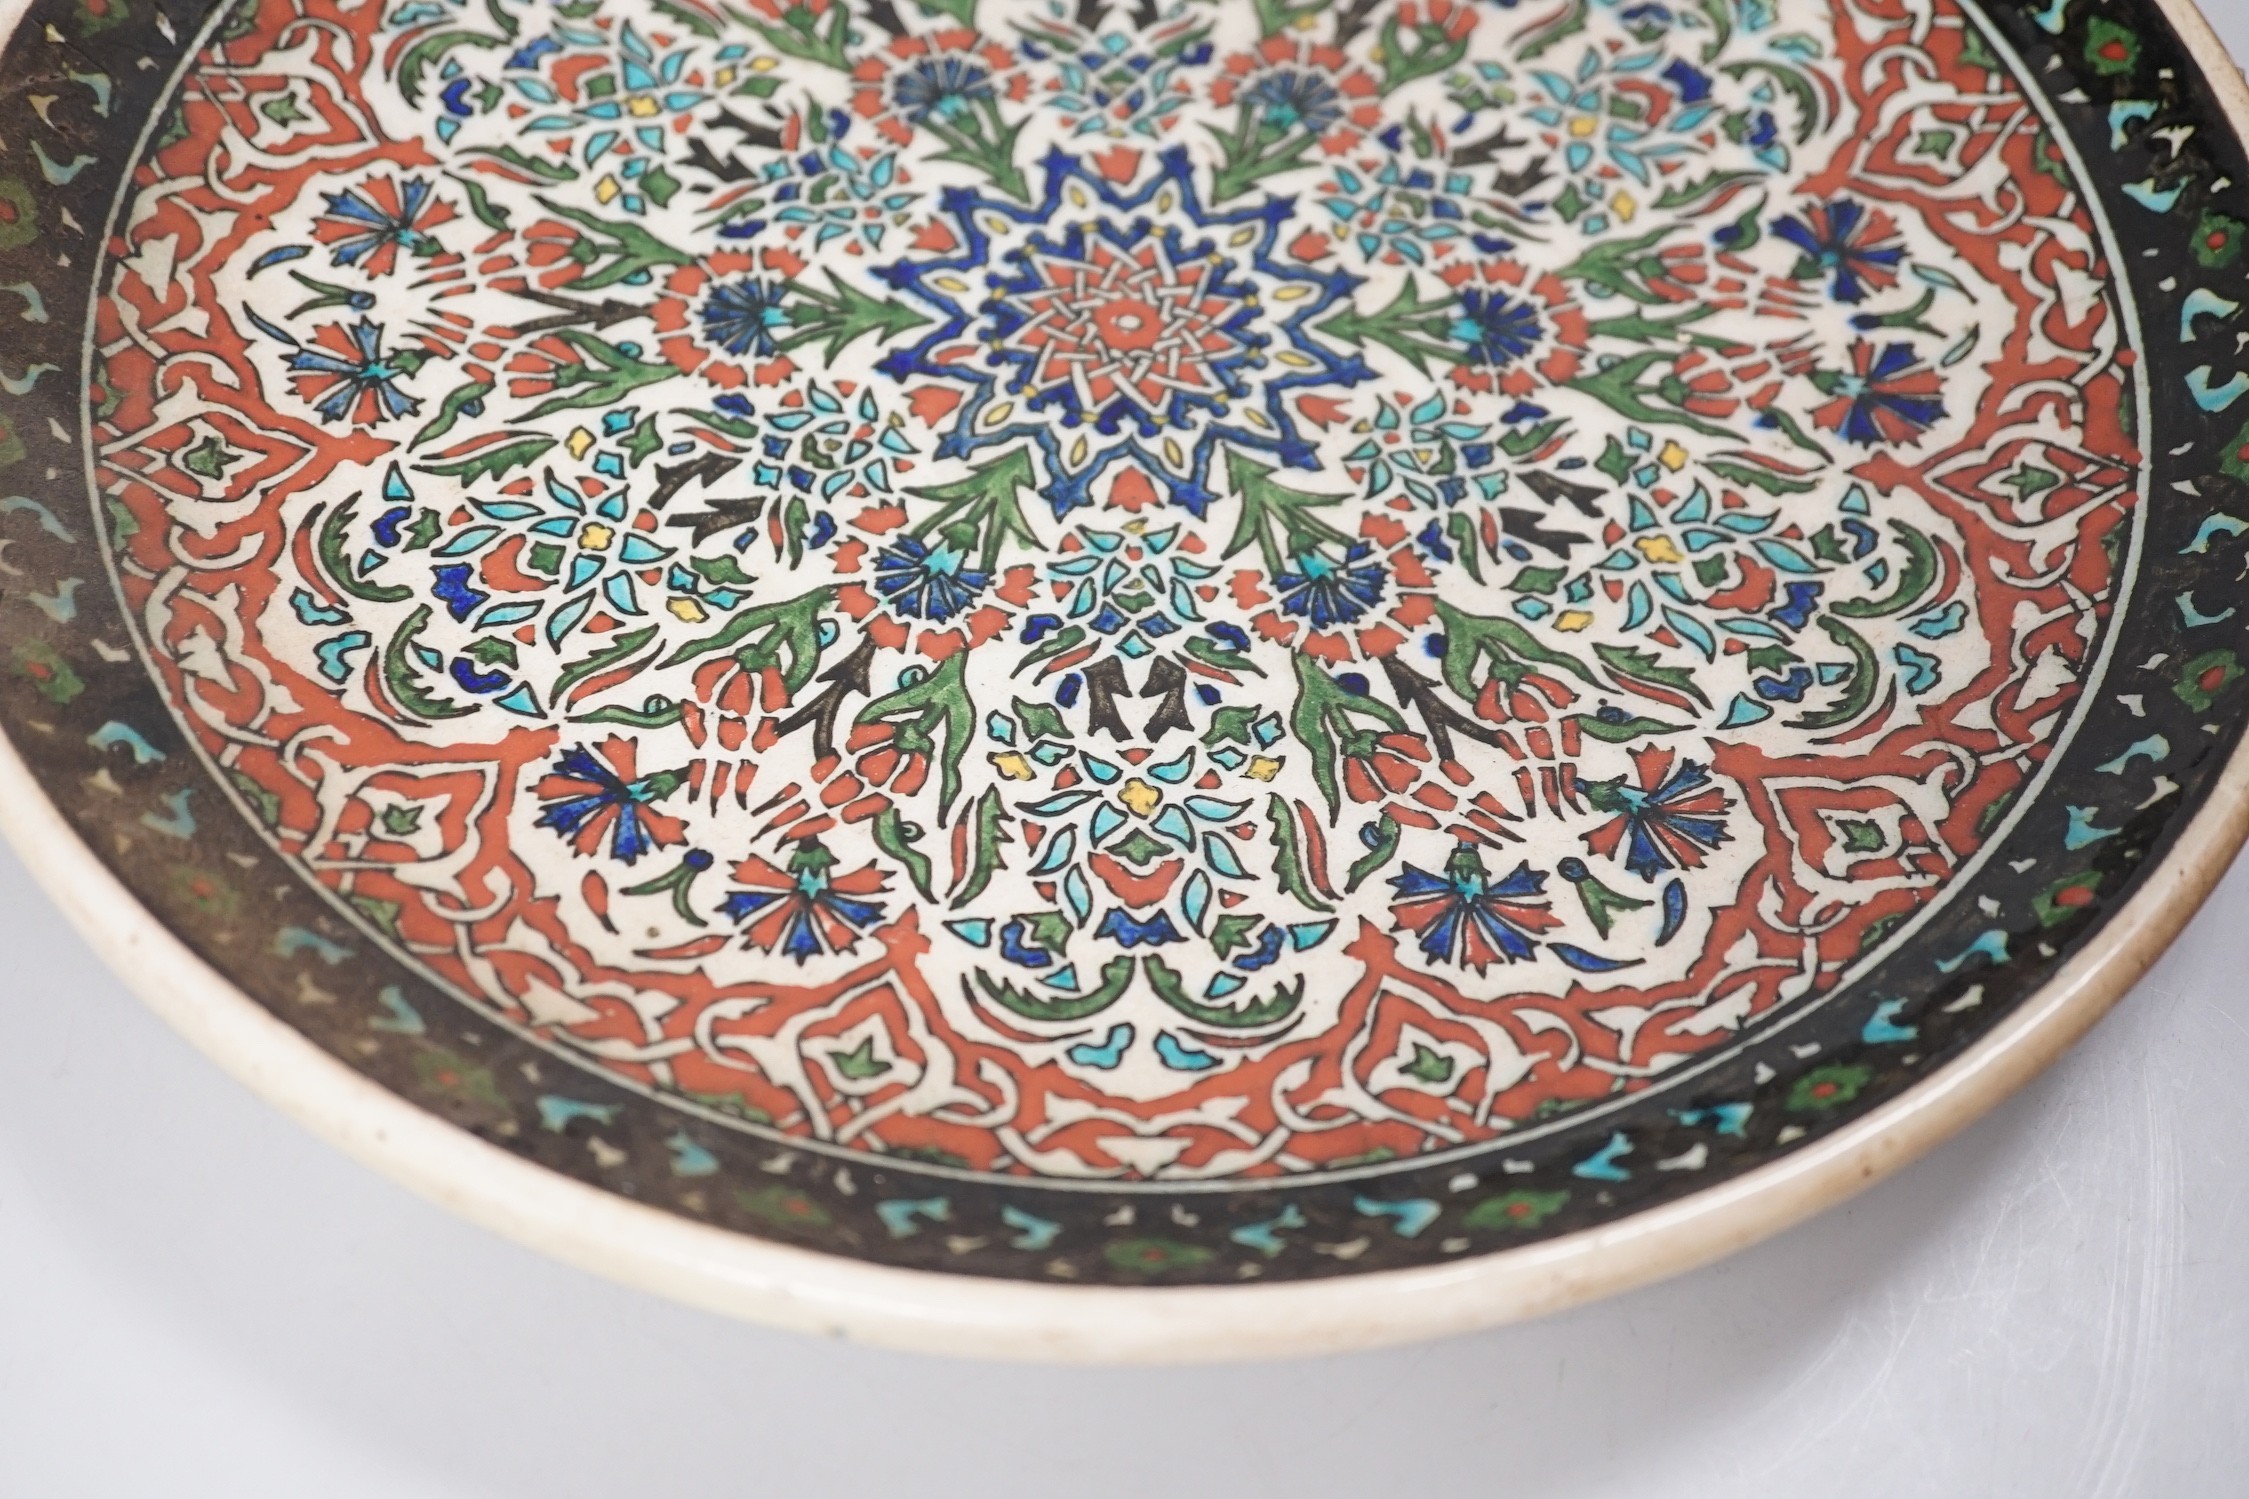 A Kütahya pottery dish, the back marked Azim Kütahya, diameter 31cm